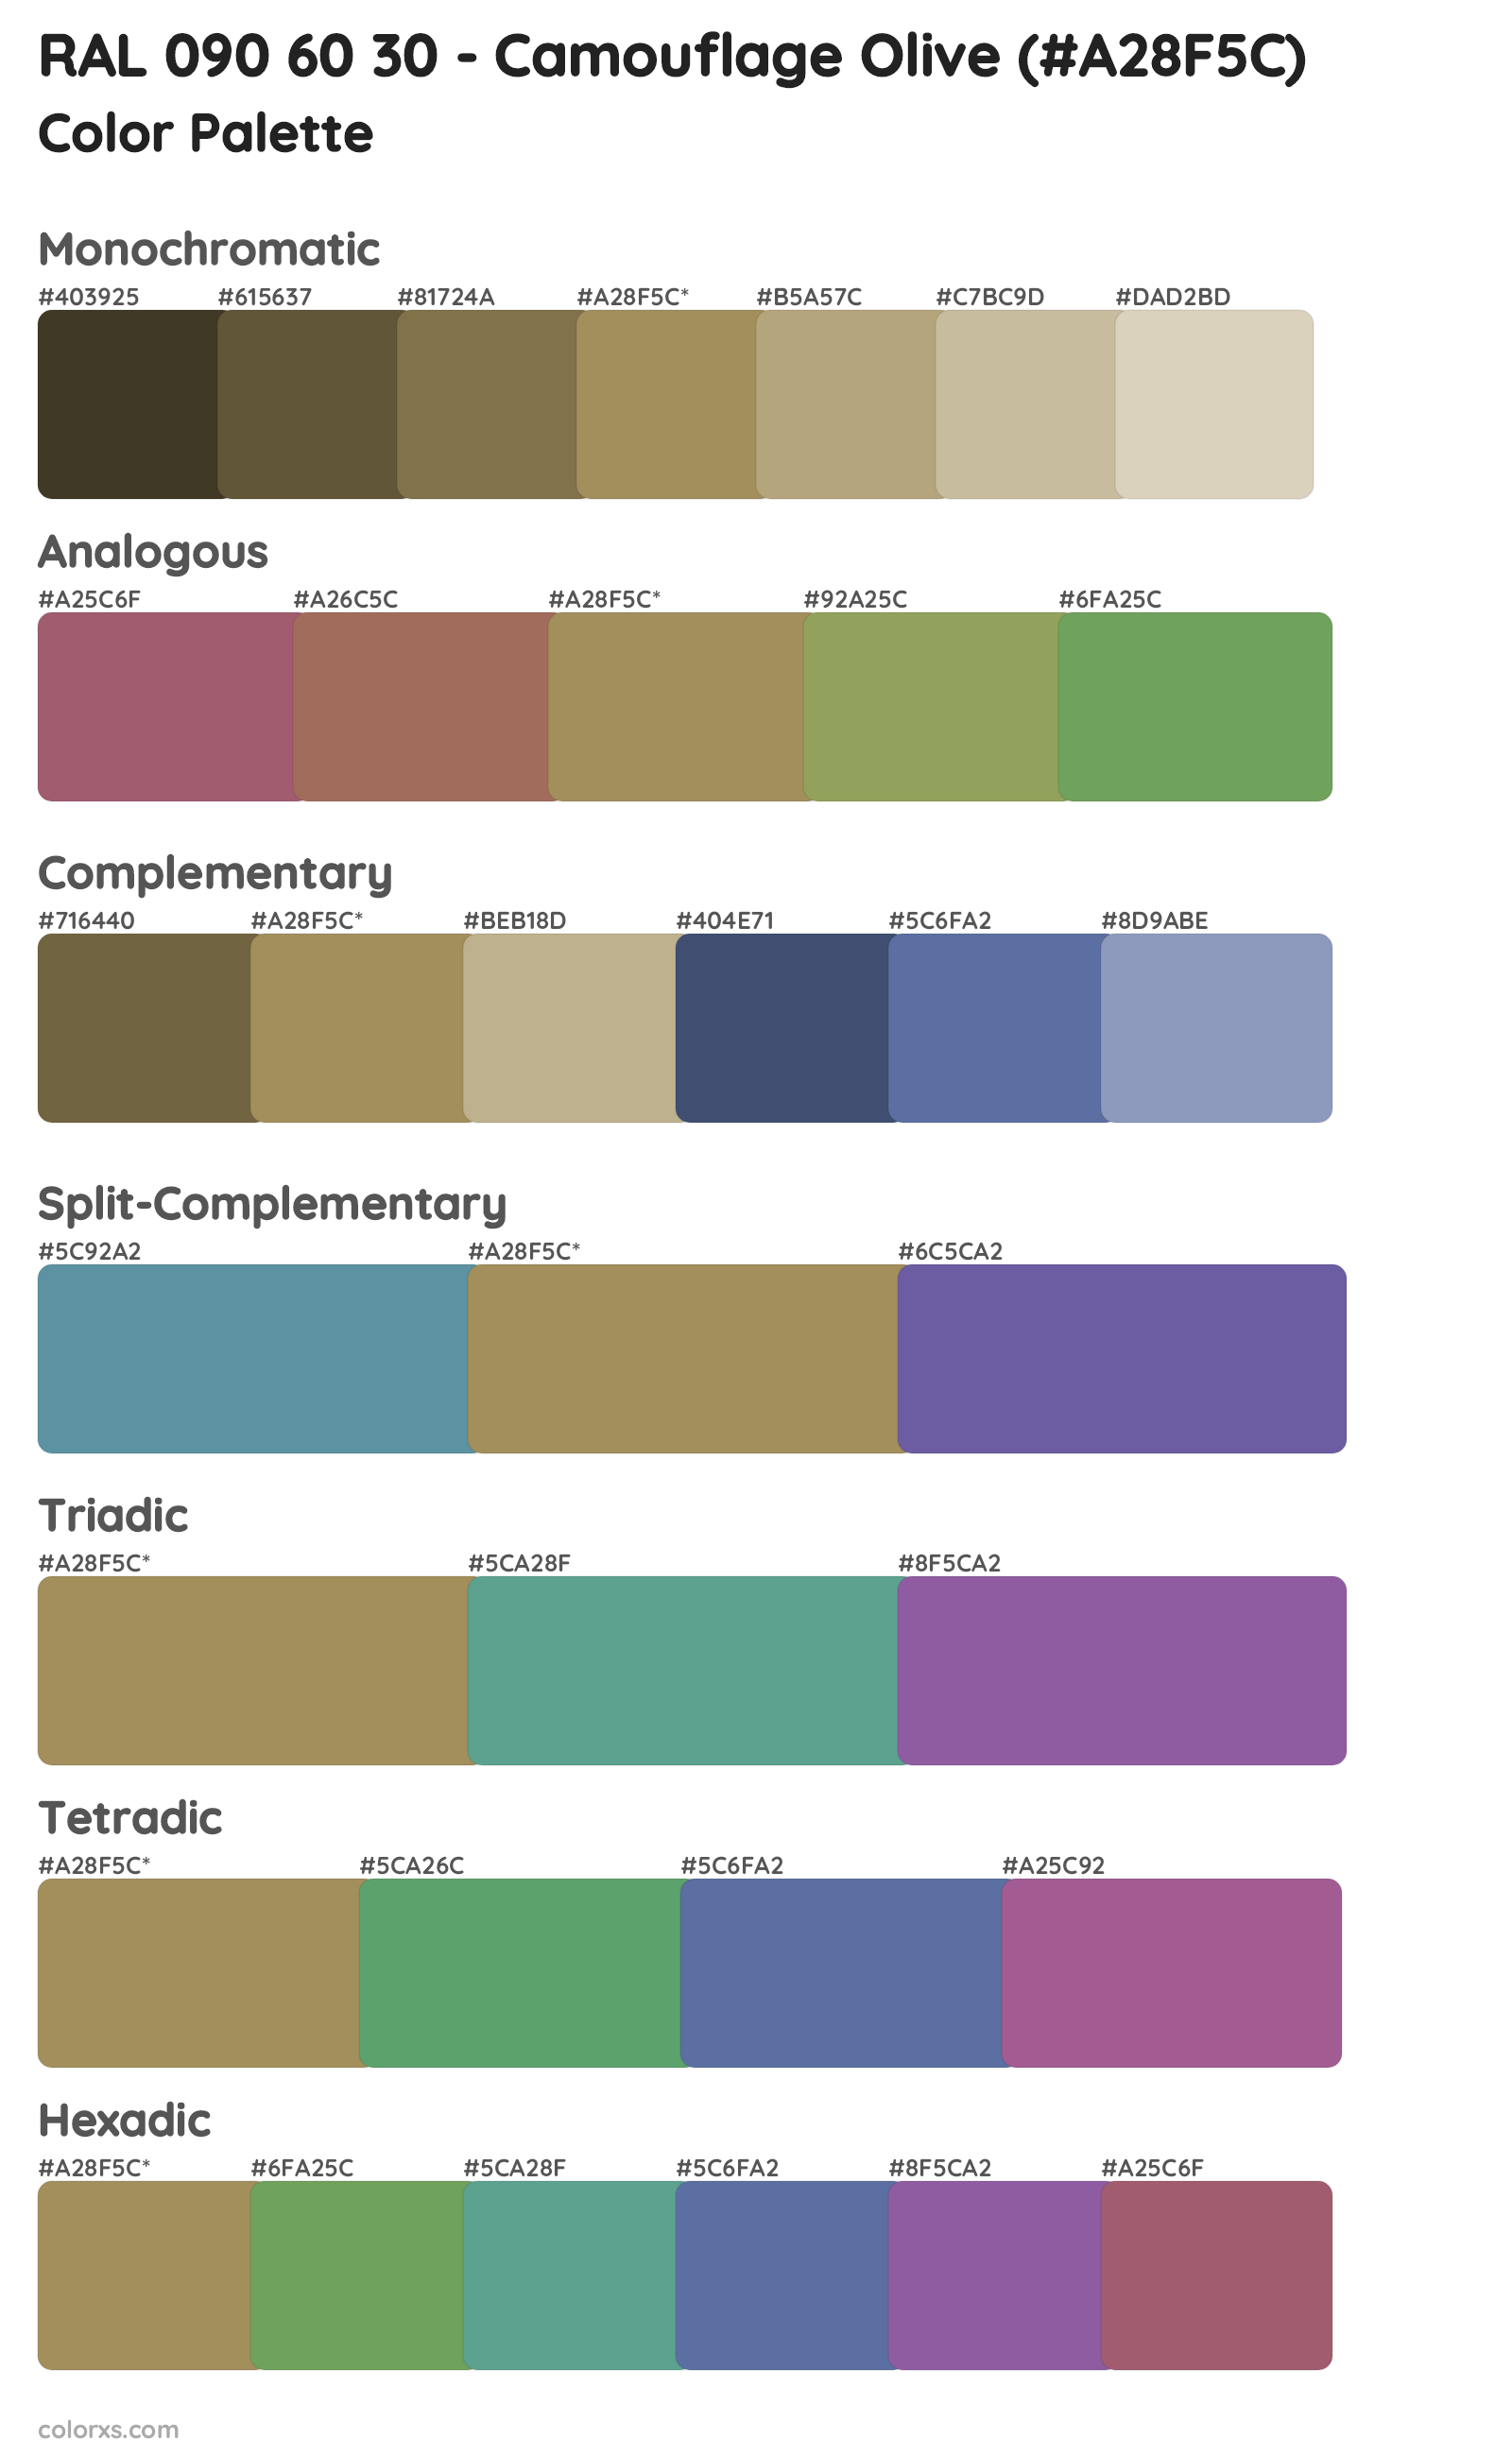 RAL 090 60 30 - Camouflage Olive Color Scheme Palettes